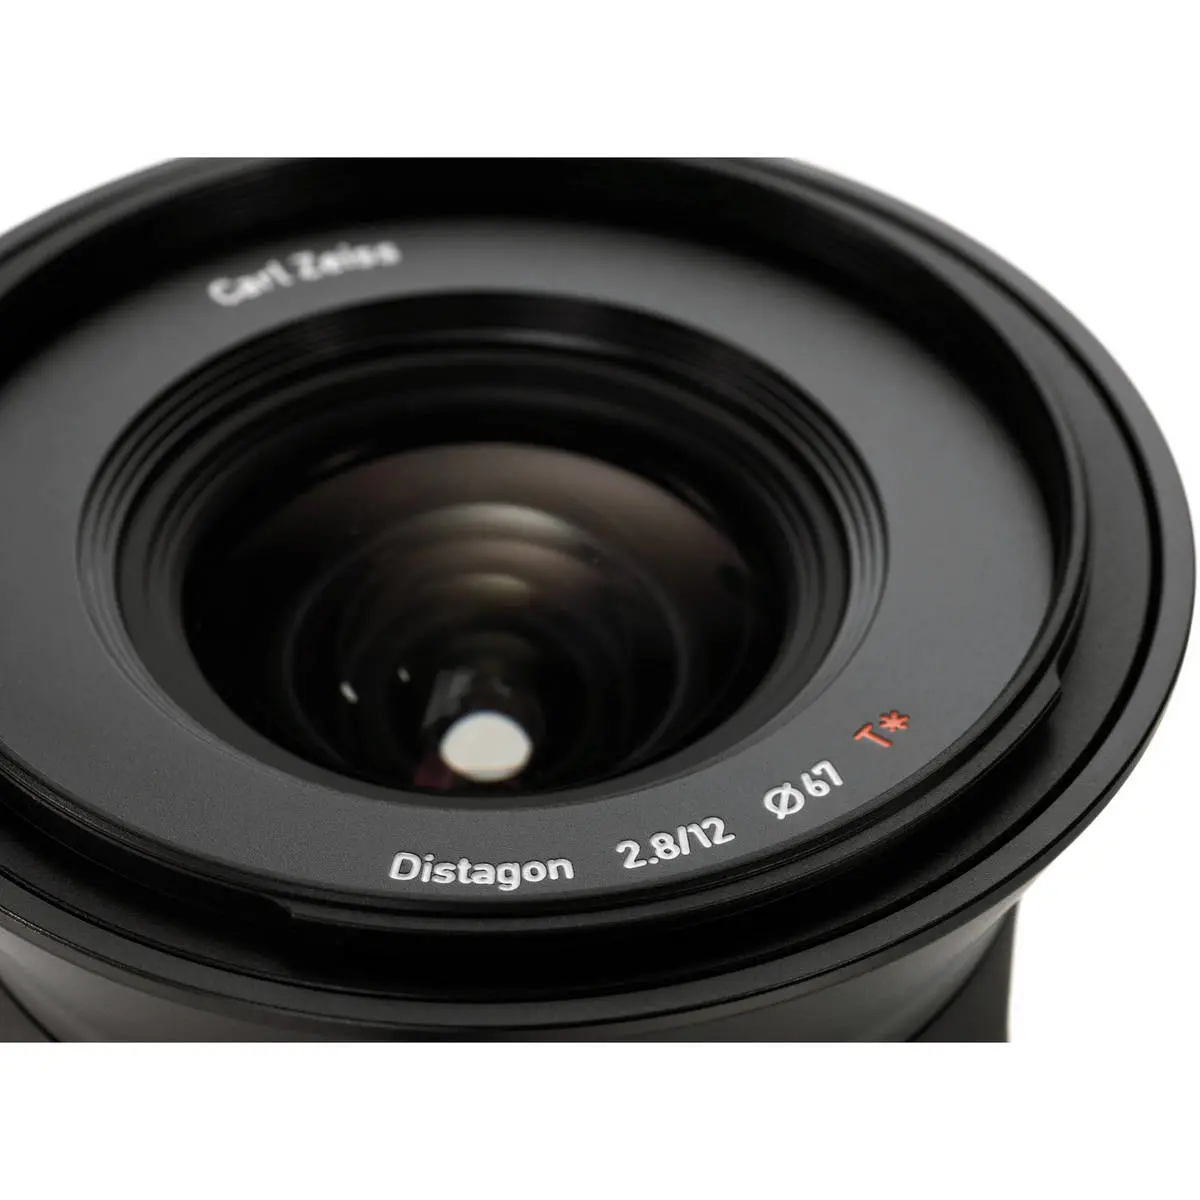 1. Carl Zeiss Touit 2.8/12 Distagon T* (Sony E) Lens